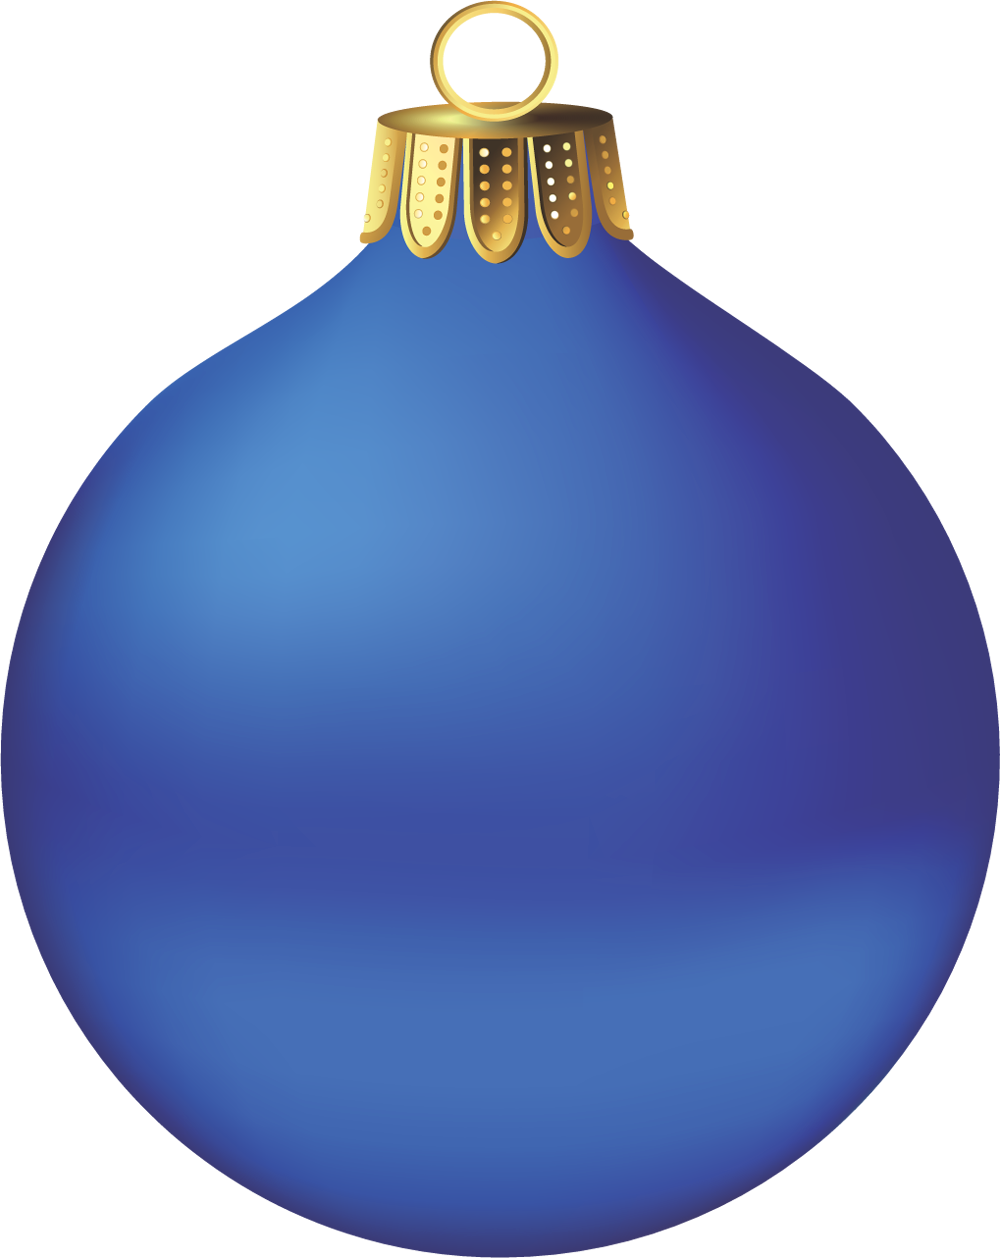 Christmas Ball Ornament Clip Art at  - vector clip art online,  royalty free & public domain